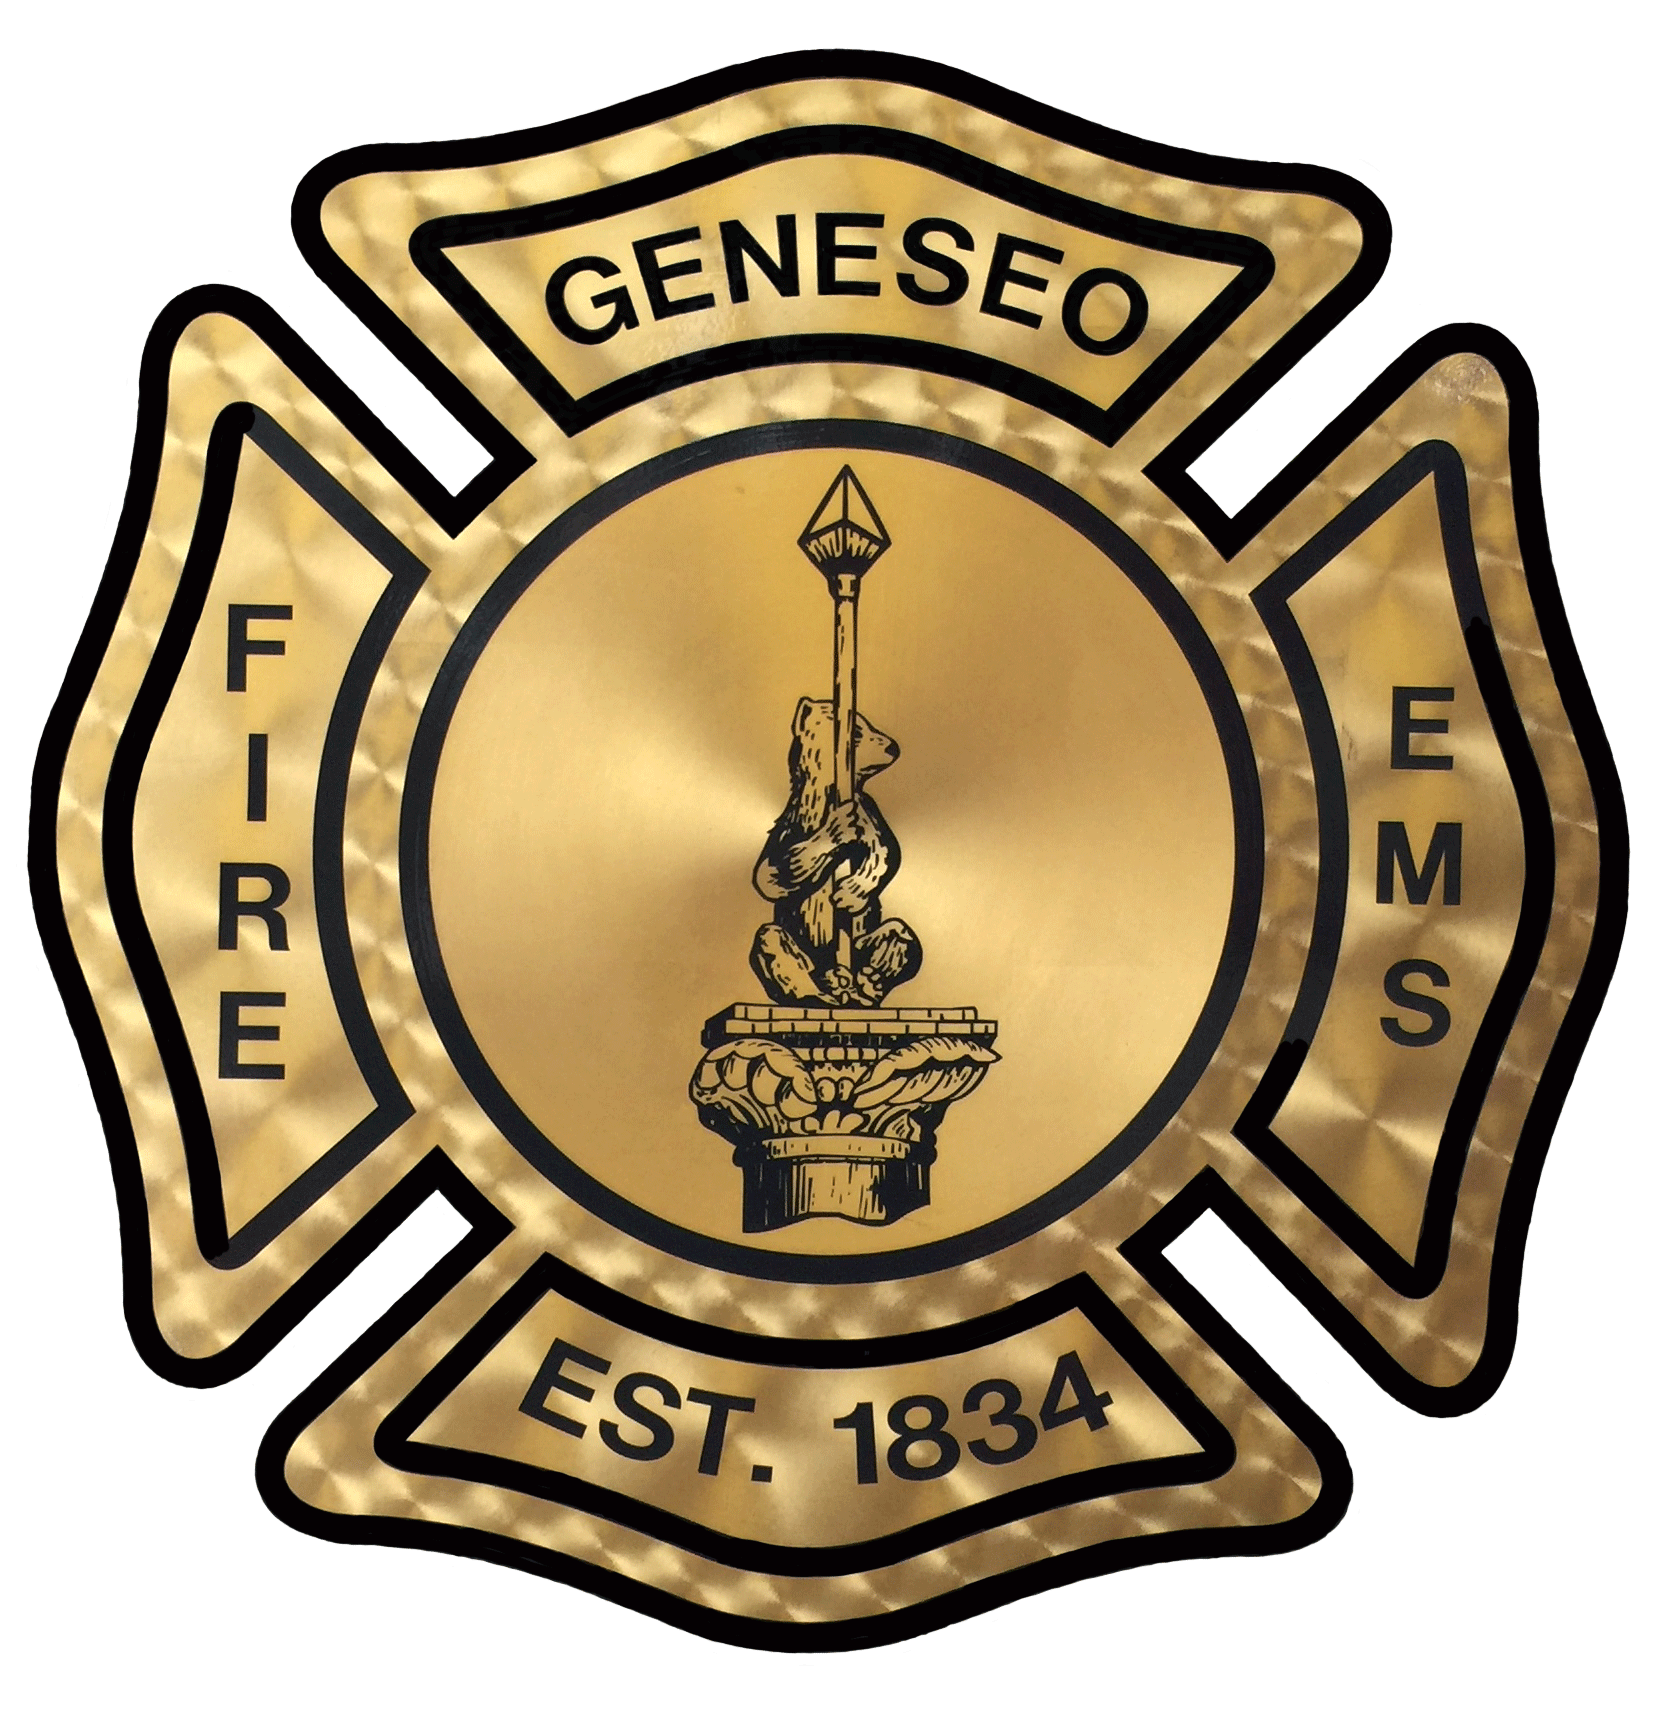 Geneseo Fire Department